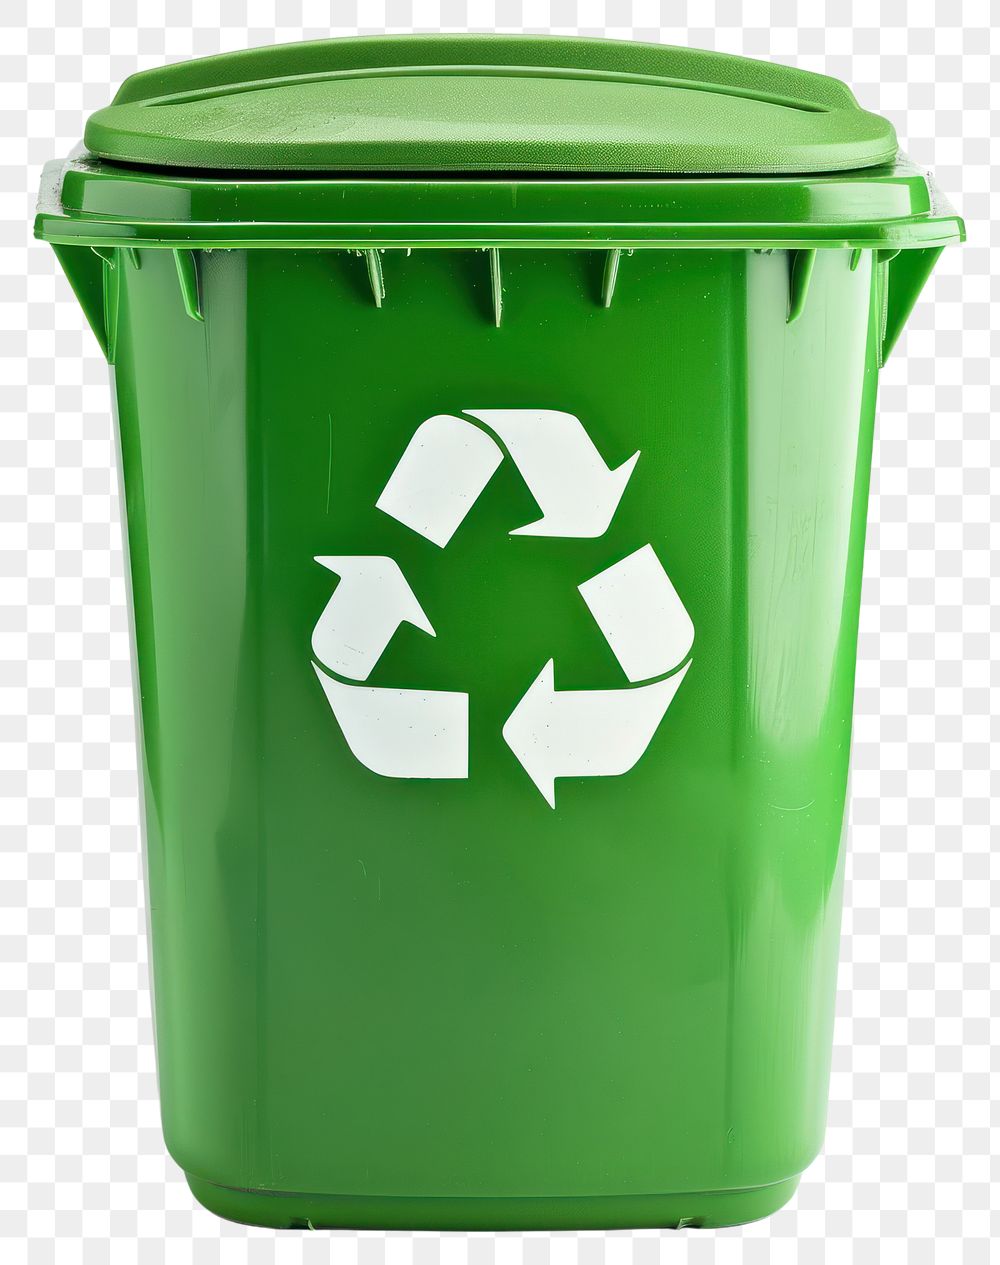 PNG Green trash bin symbol recycling symbol letterbox